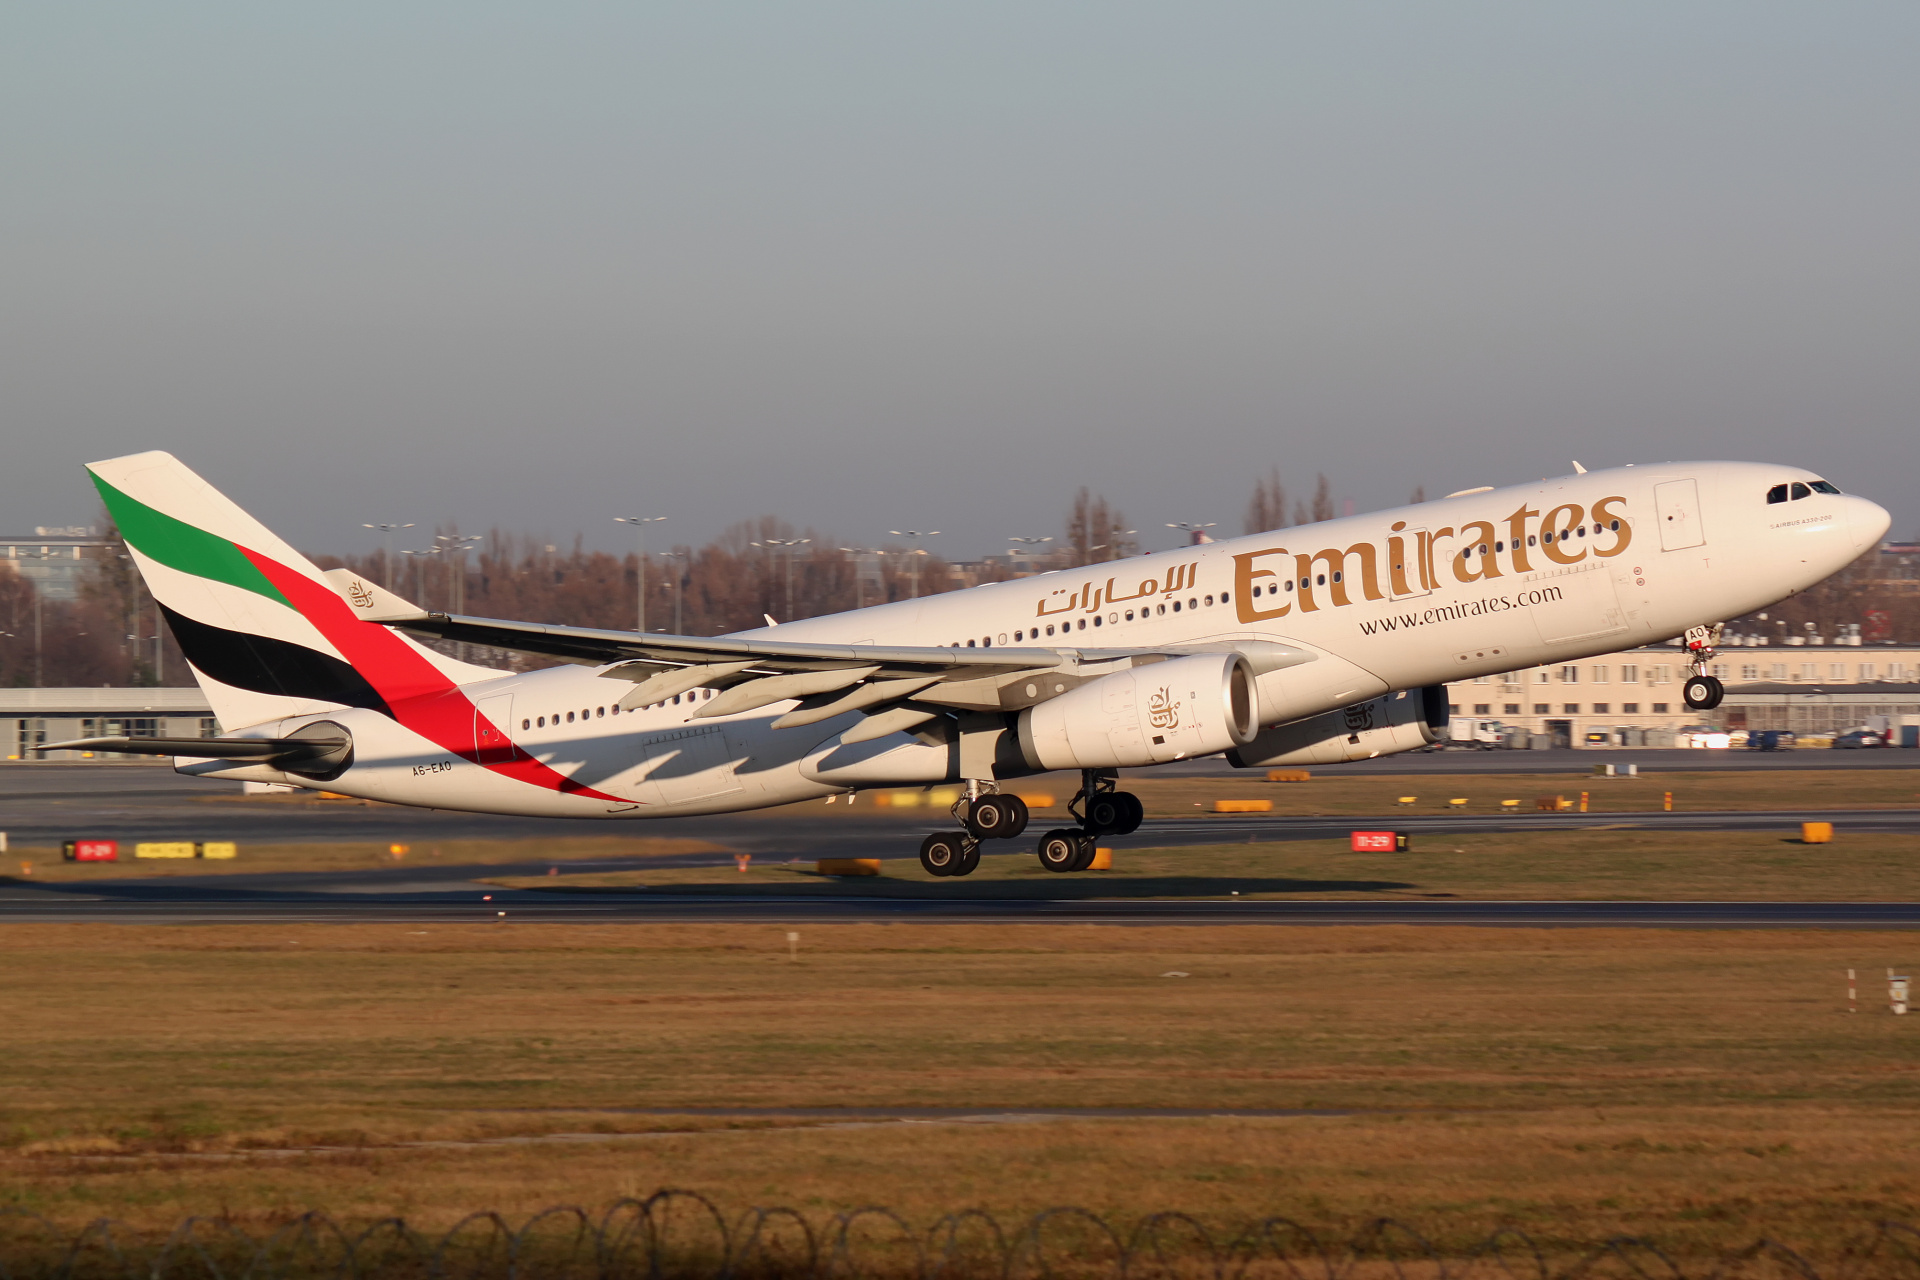 A6-EAO (Aircraft » EPWA Spotting » Airbus A330-200 » Emirates)